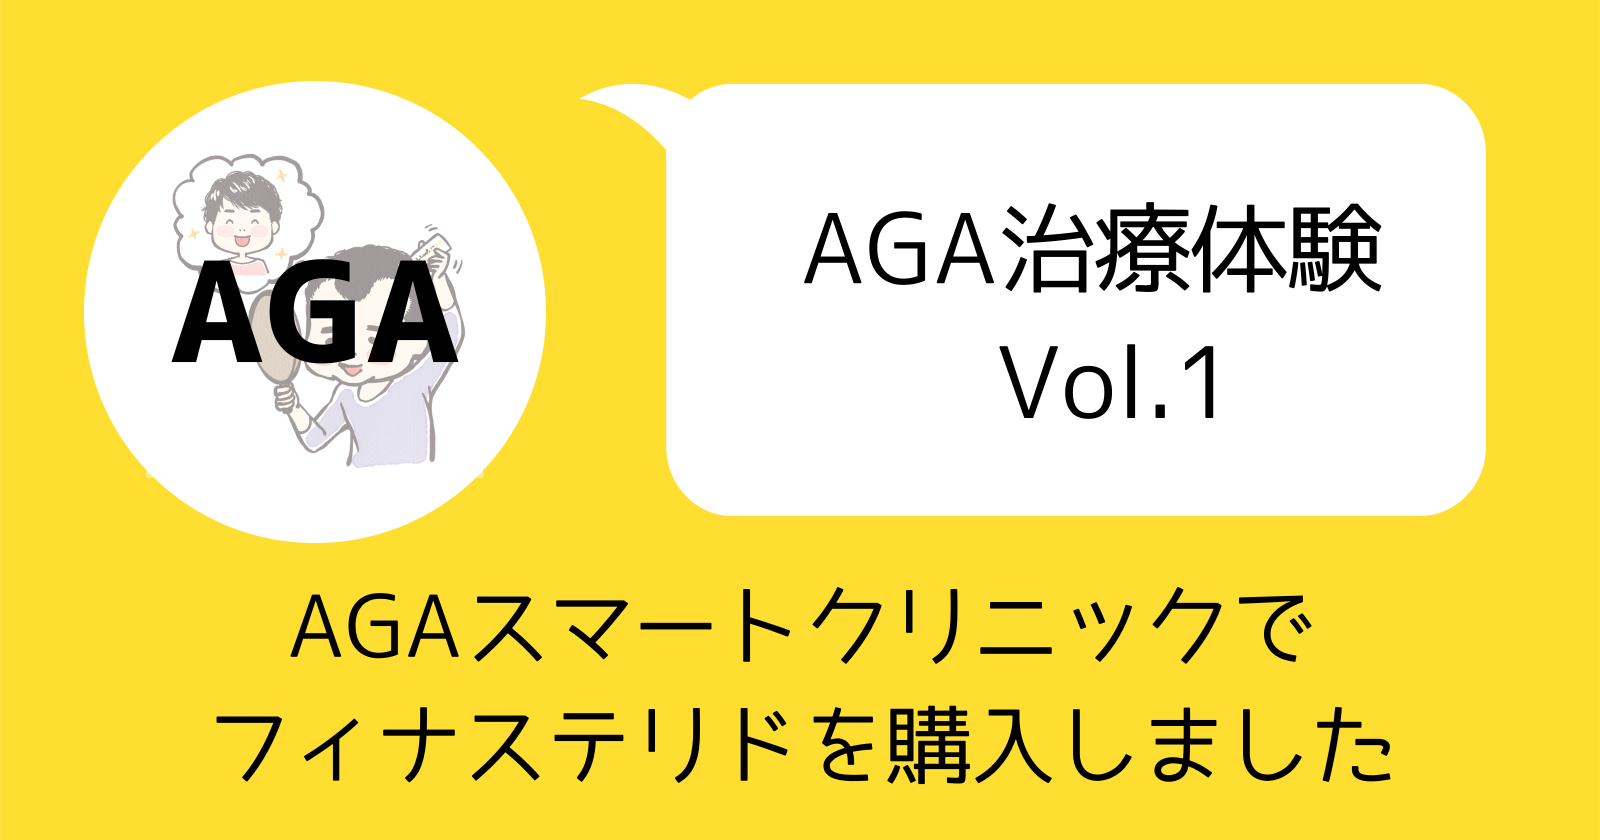 AGA治療体験Vol.1